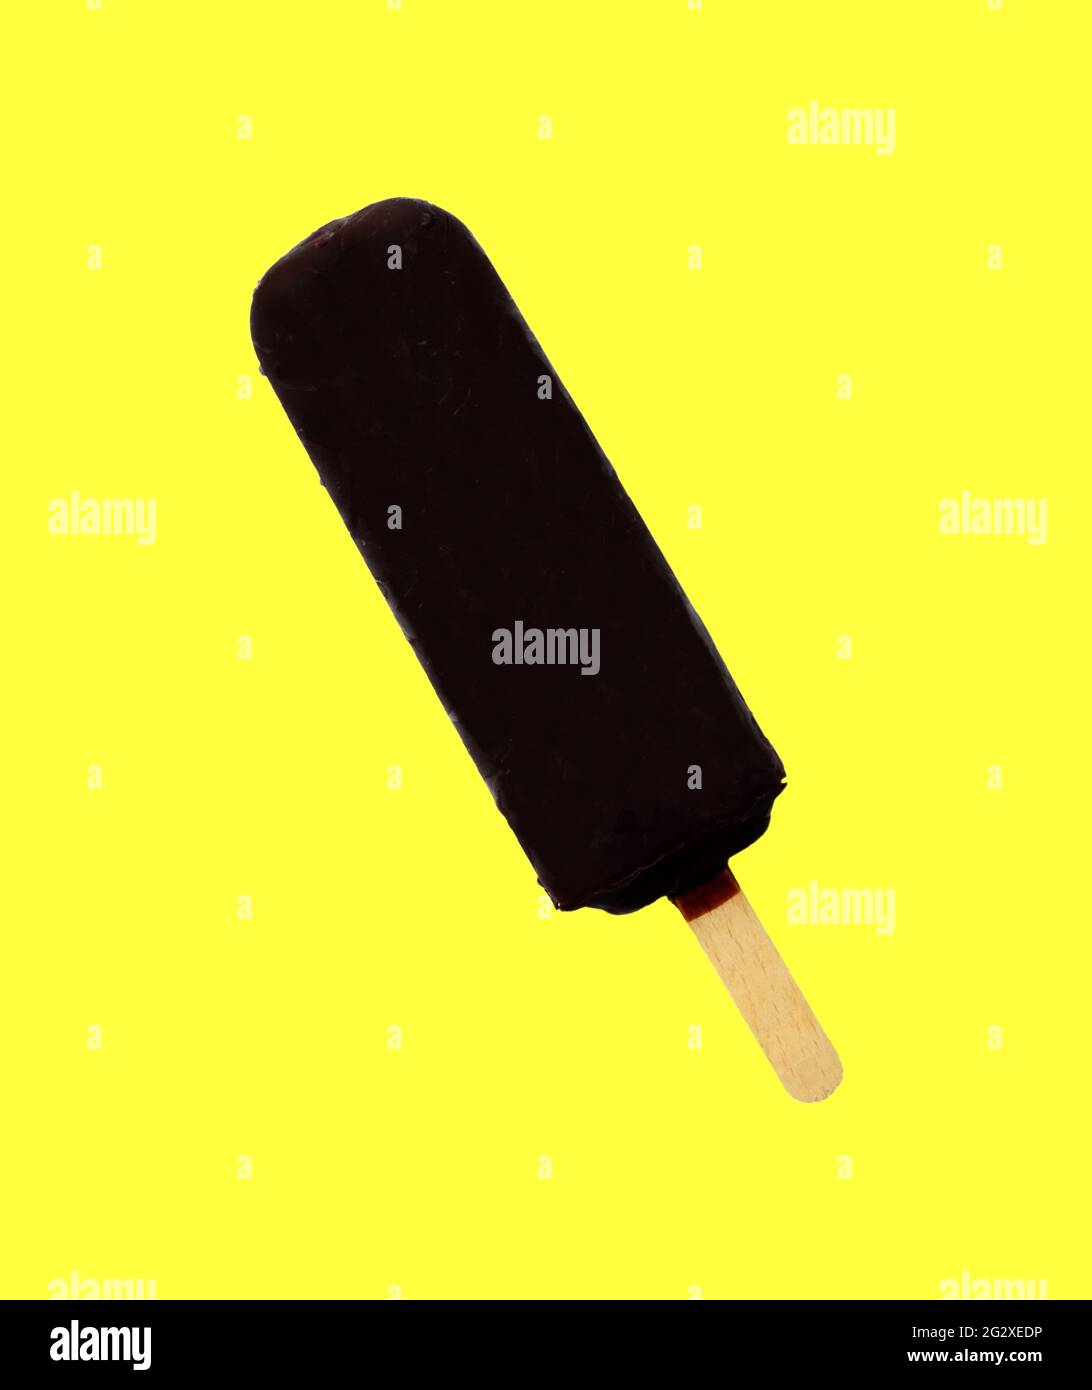 Schokoladeneis Lolly, Schokoladenglasur Nahaufnahme auf dem gelben isolierten Hintergrund. Eisdiele, im Sommer heiße Tage. Kaltes, leckeres Eis. Eislolly. Stockfoto